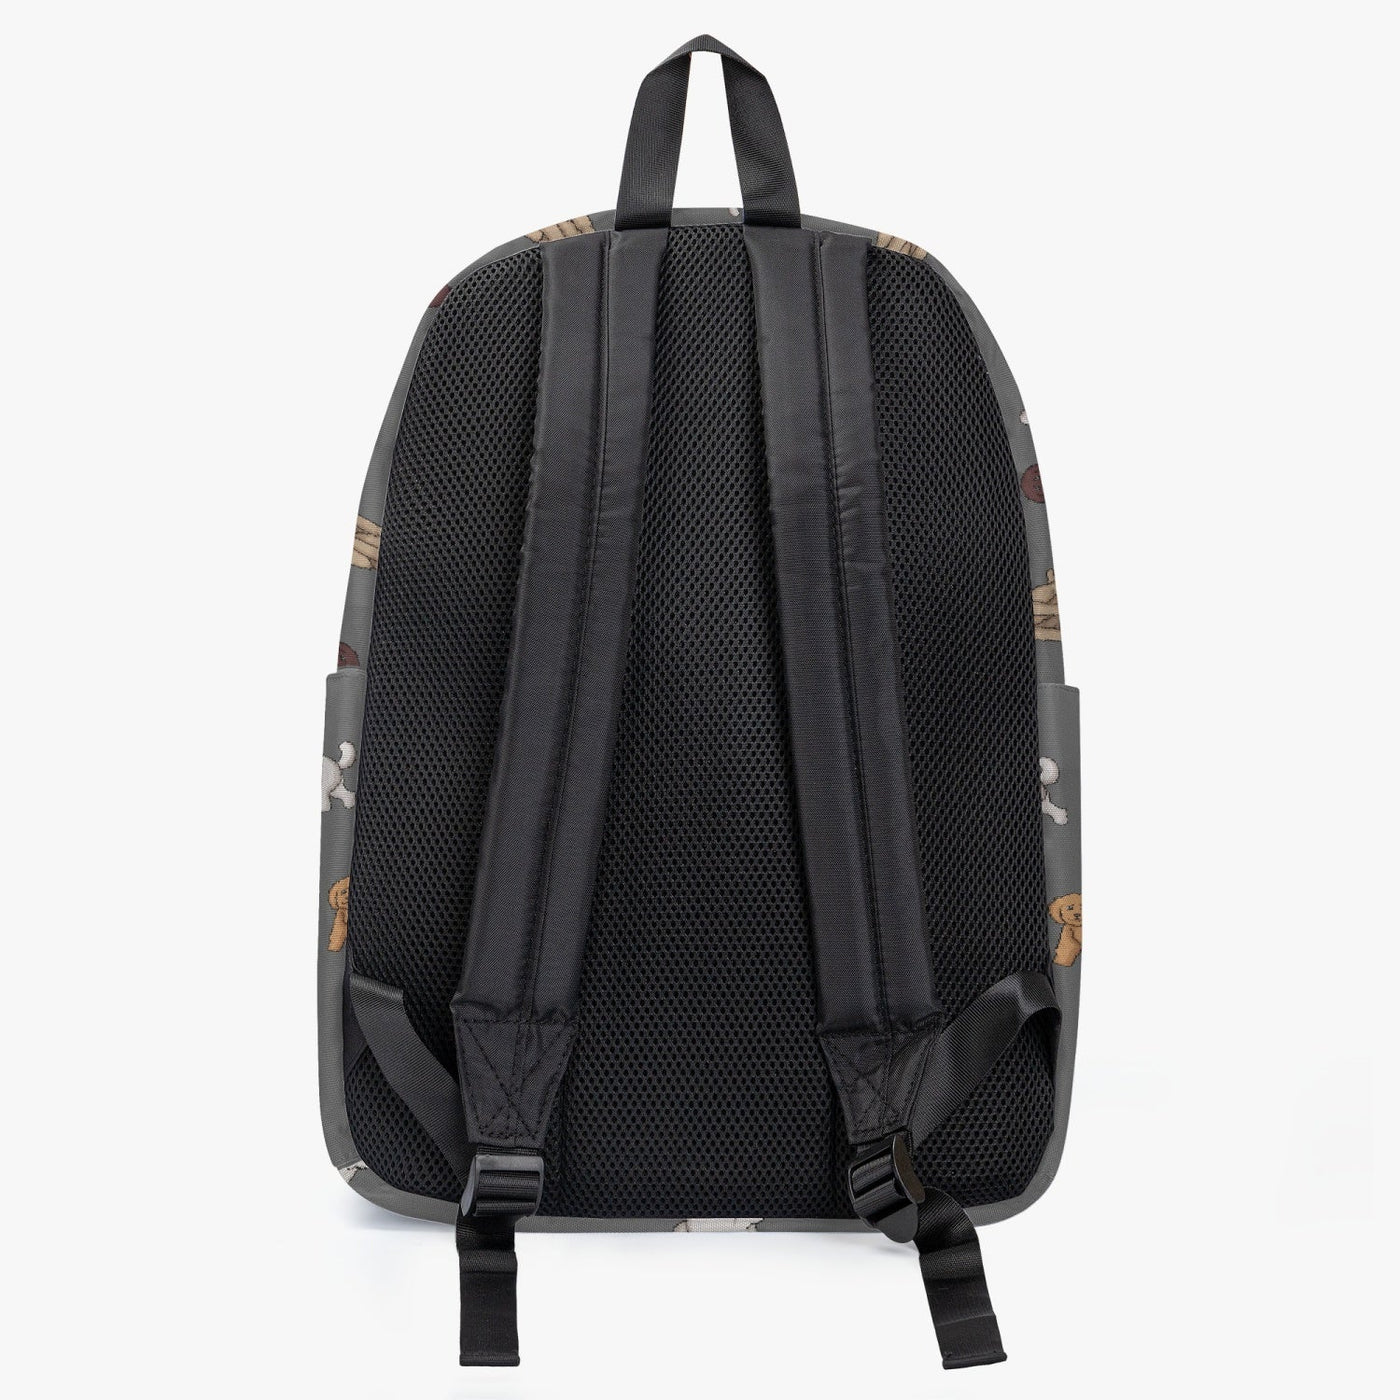 Labradoodle - Backpack